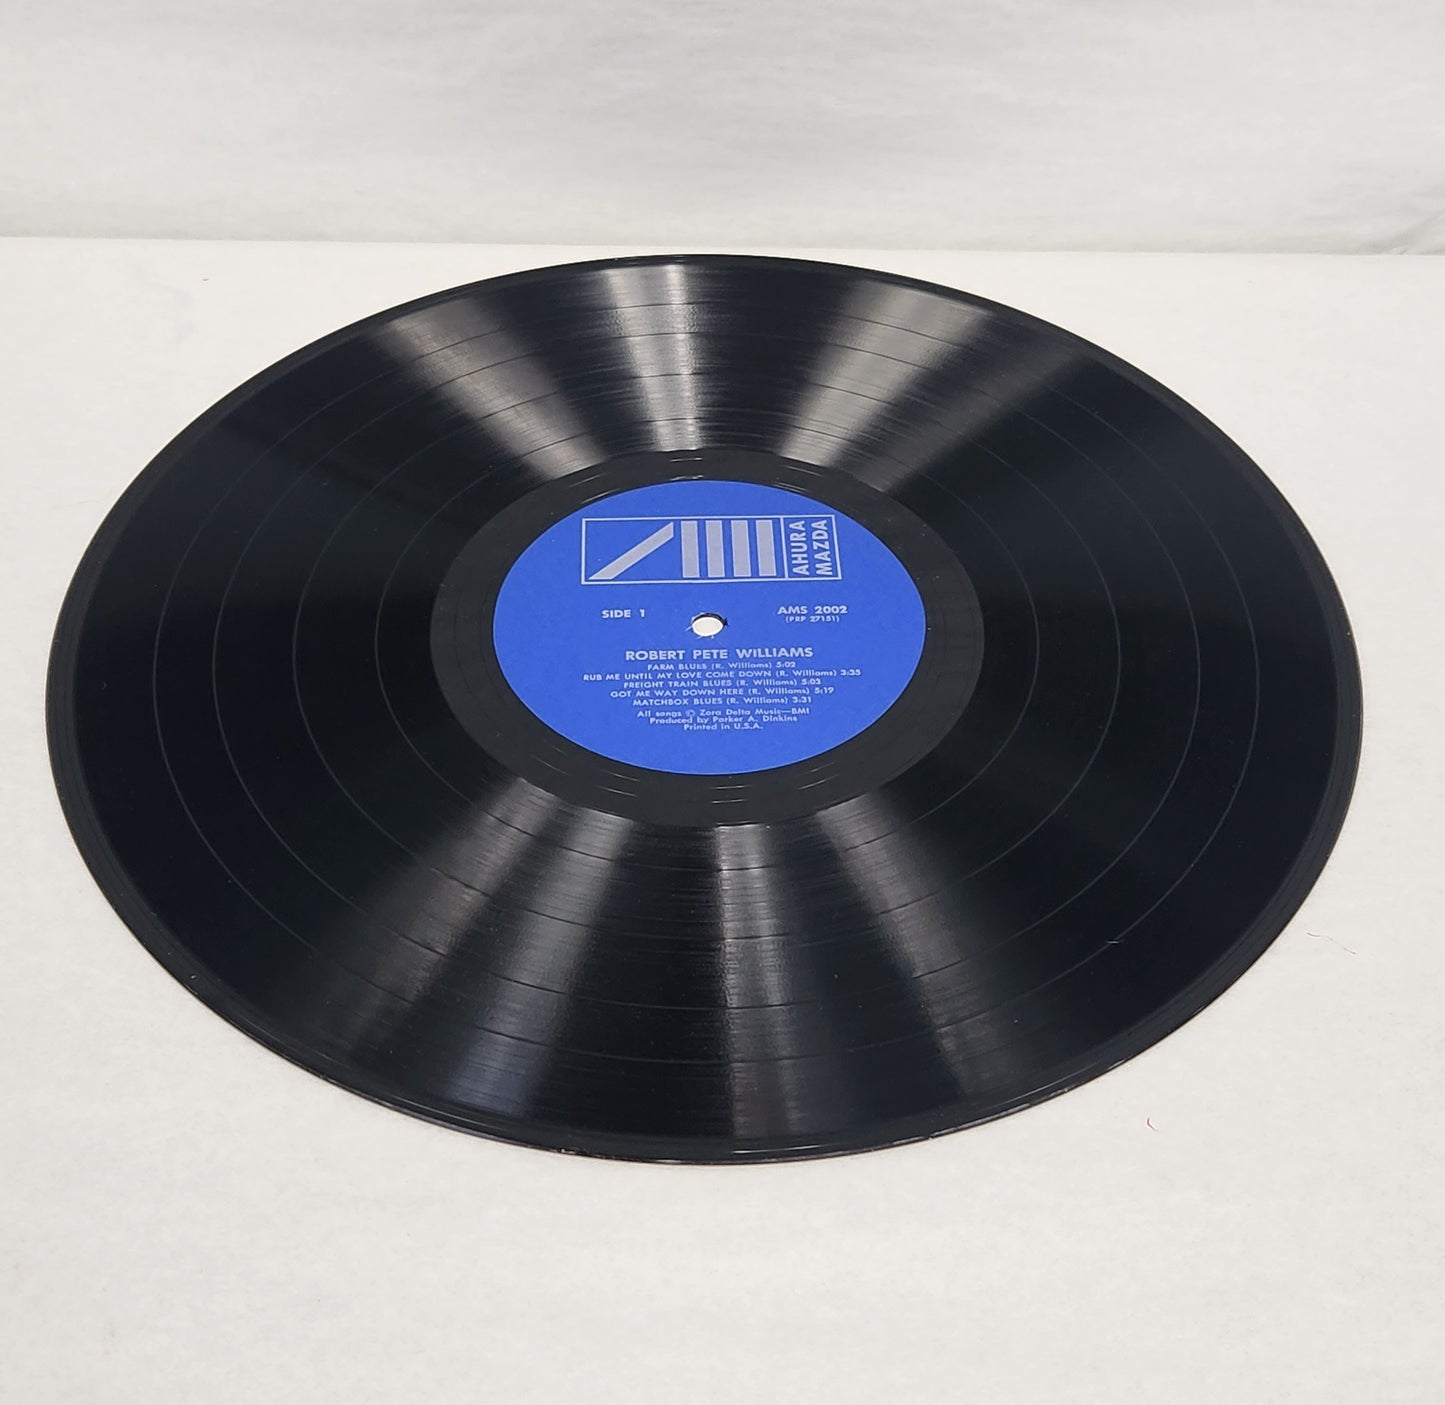 Robert Pete Williams Self-Titled 1971 Blues Record Album